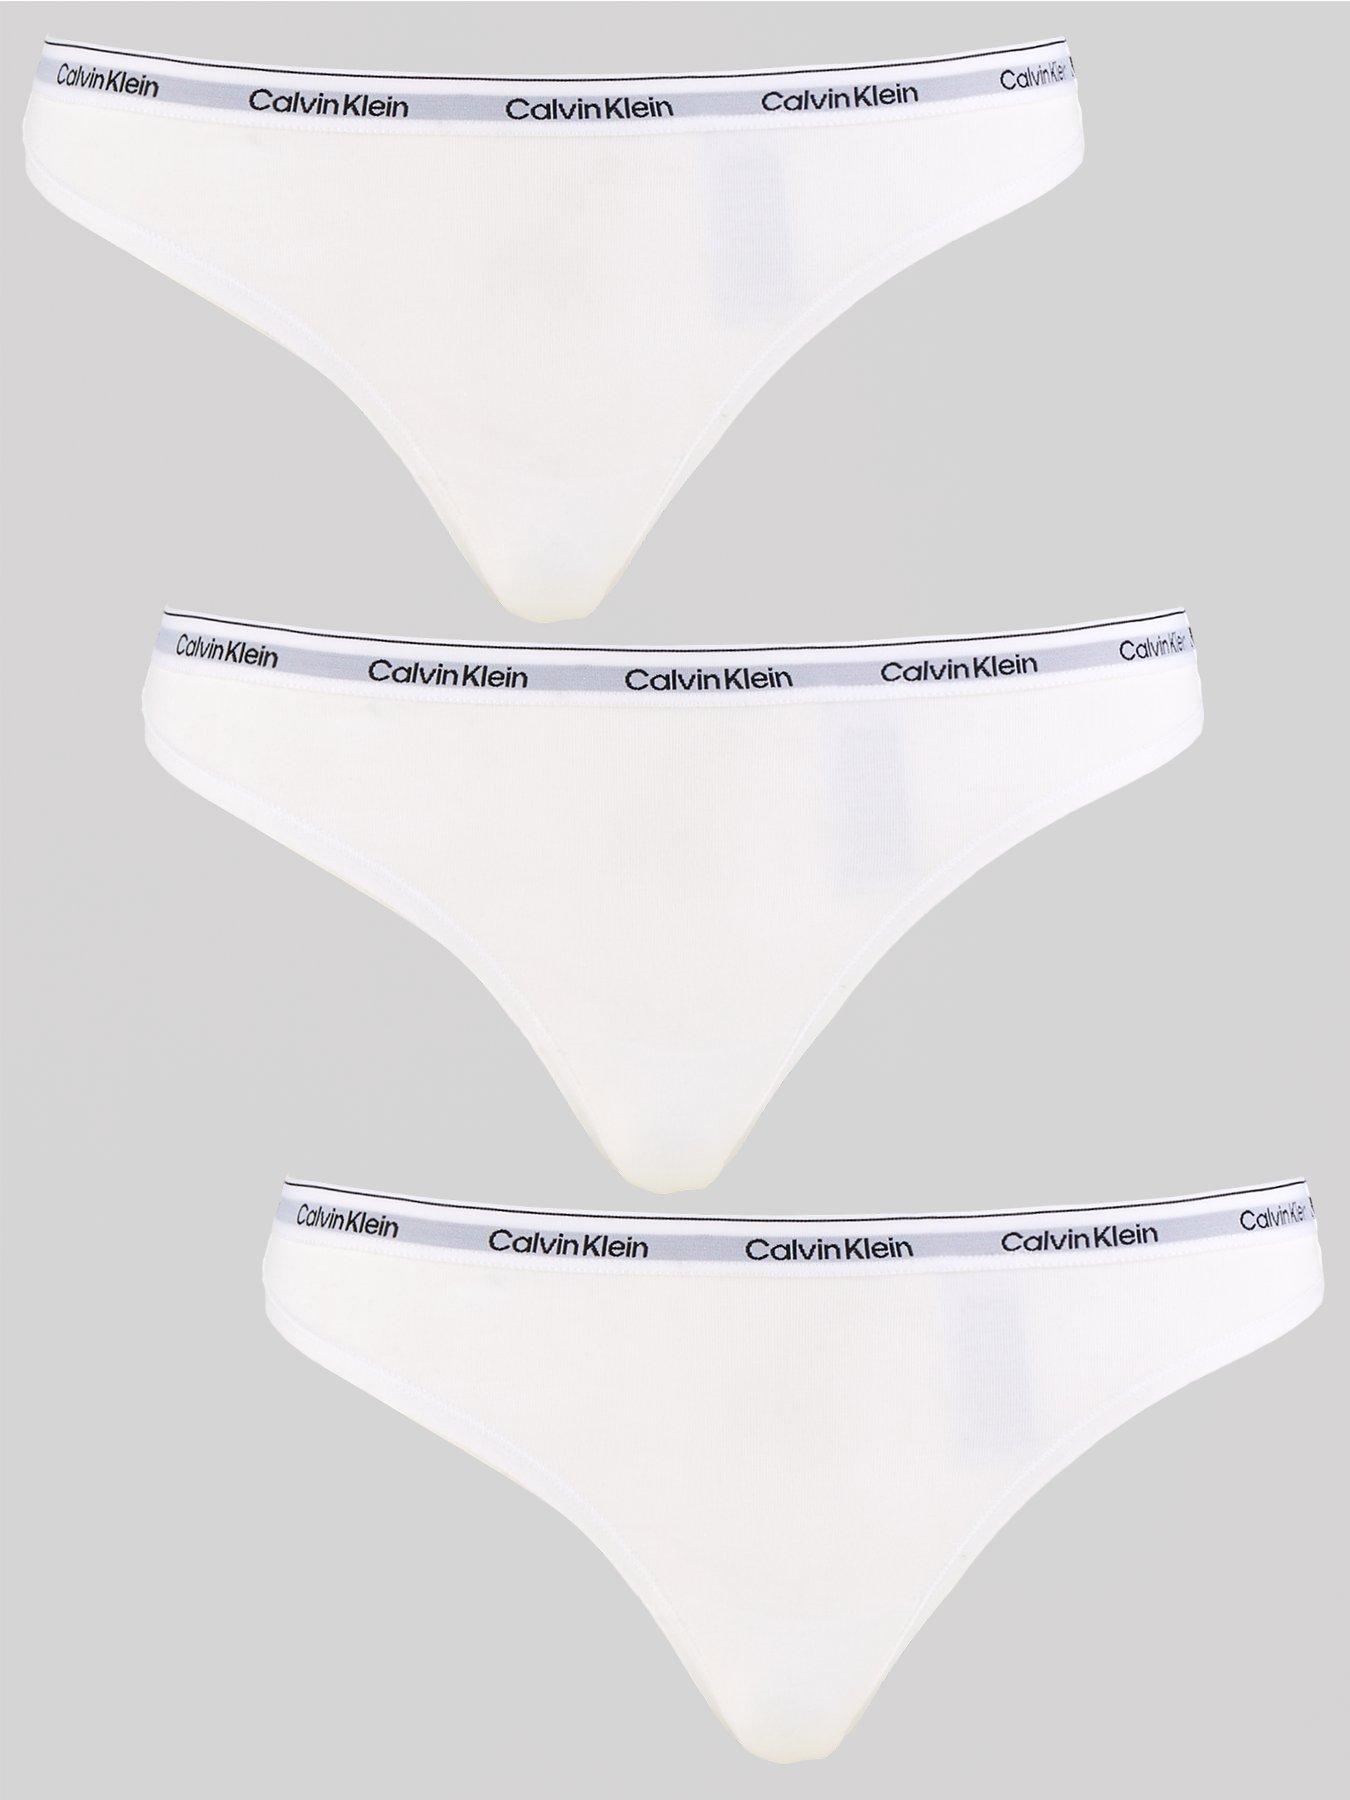 Calvin Klein Curve Modern Cotton Thong - White